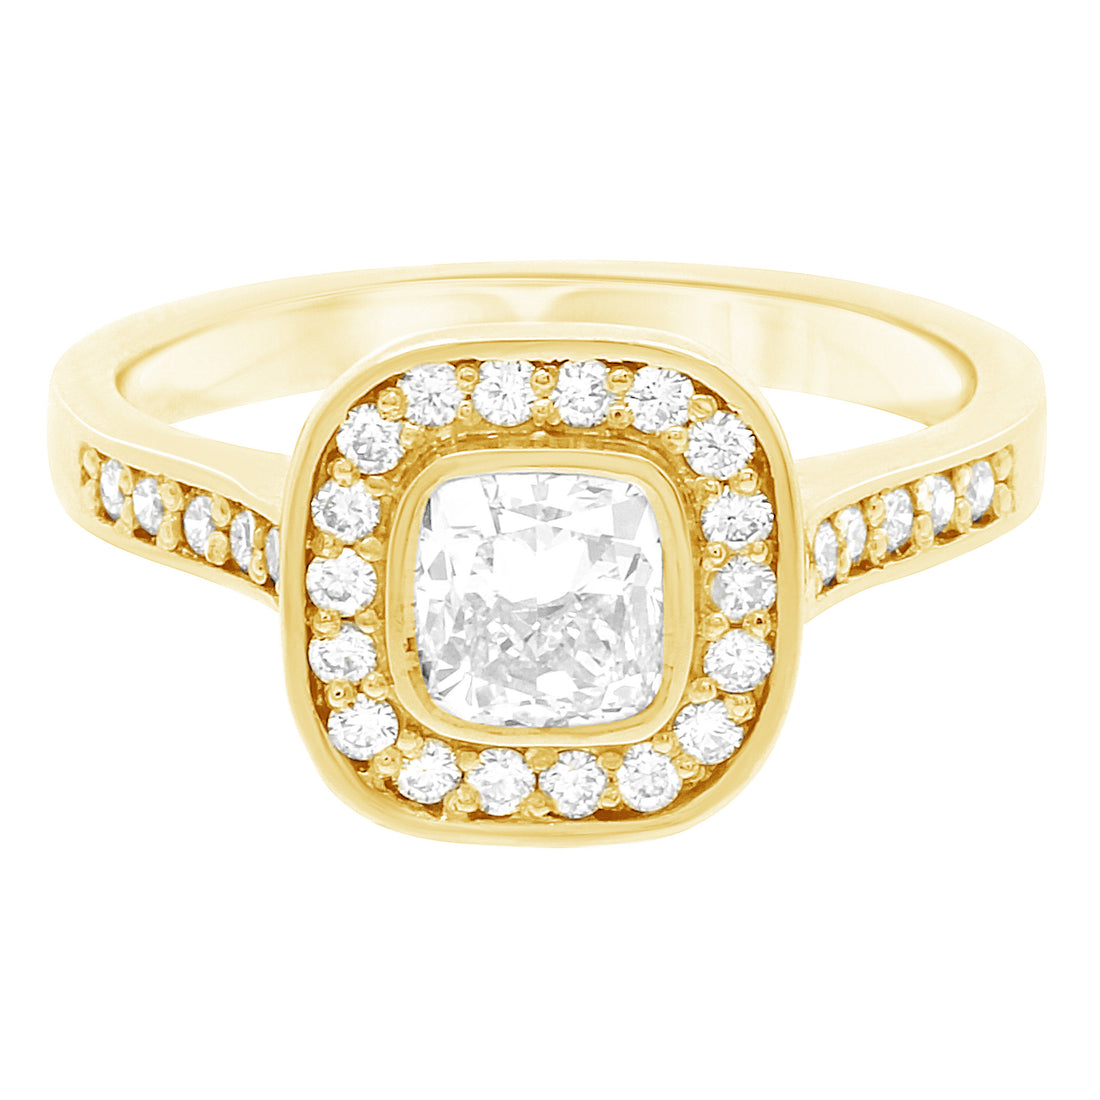 Cushion Cut Bezel Diamond Ring in yellow gold